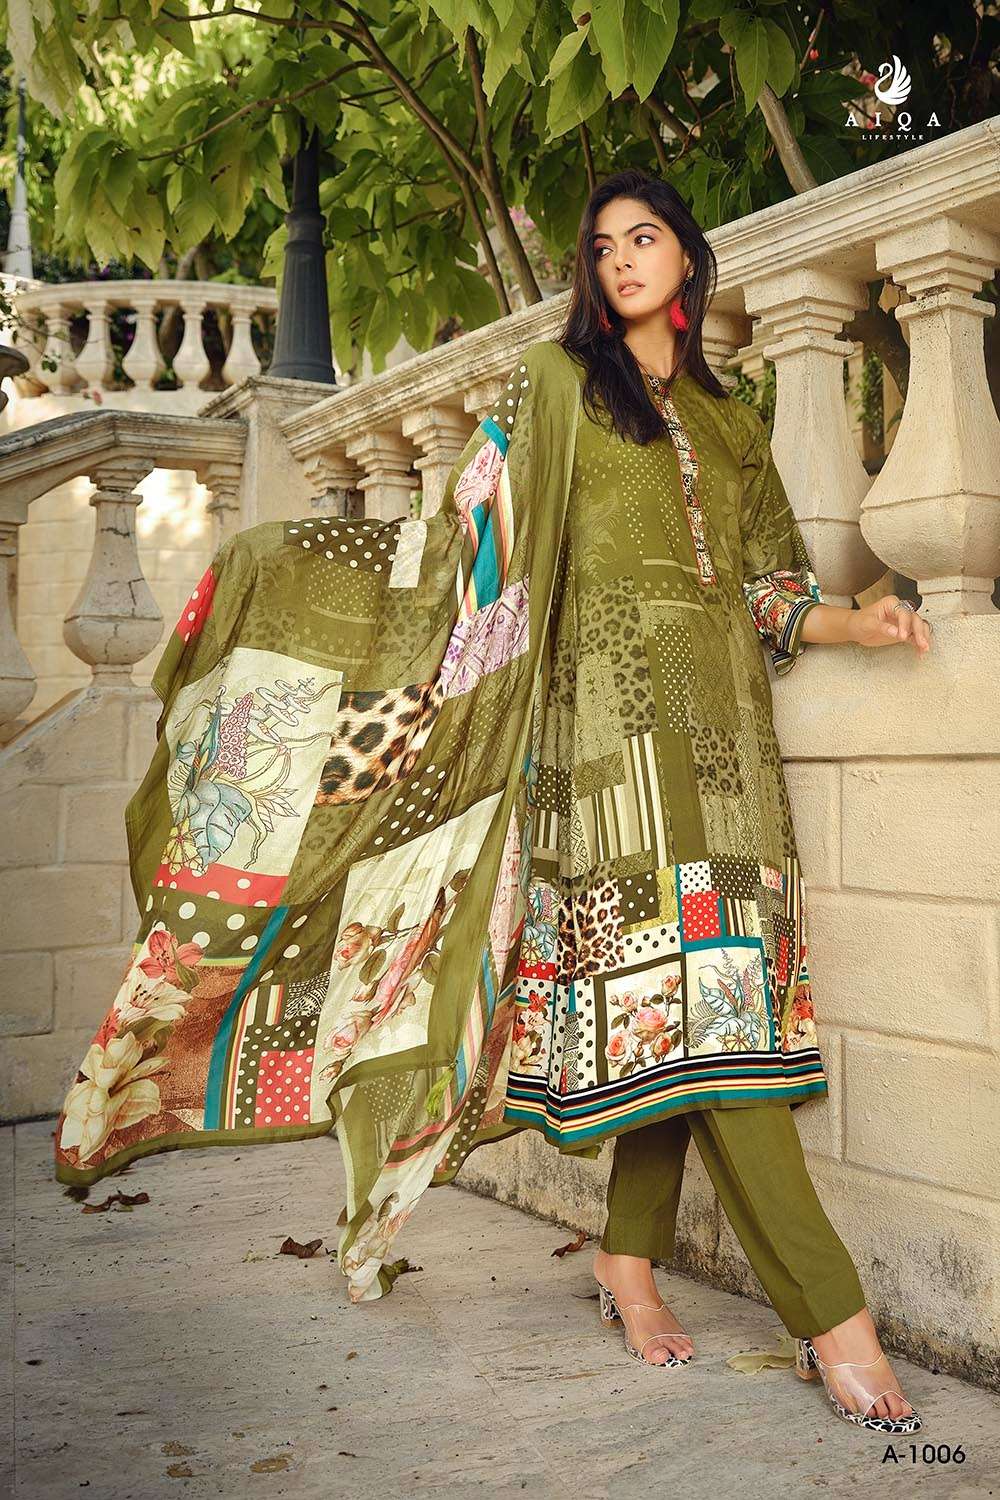 aiqa lifestyle fasurd 1001-1008 series latest pakistani salwar kameez wholesaler surat gujarat